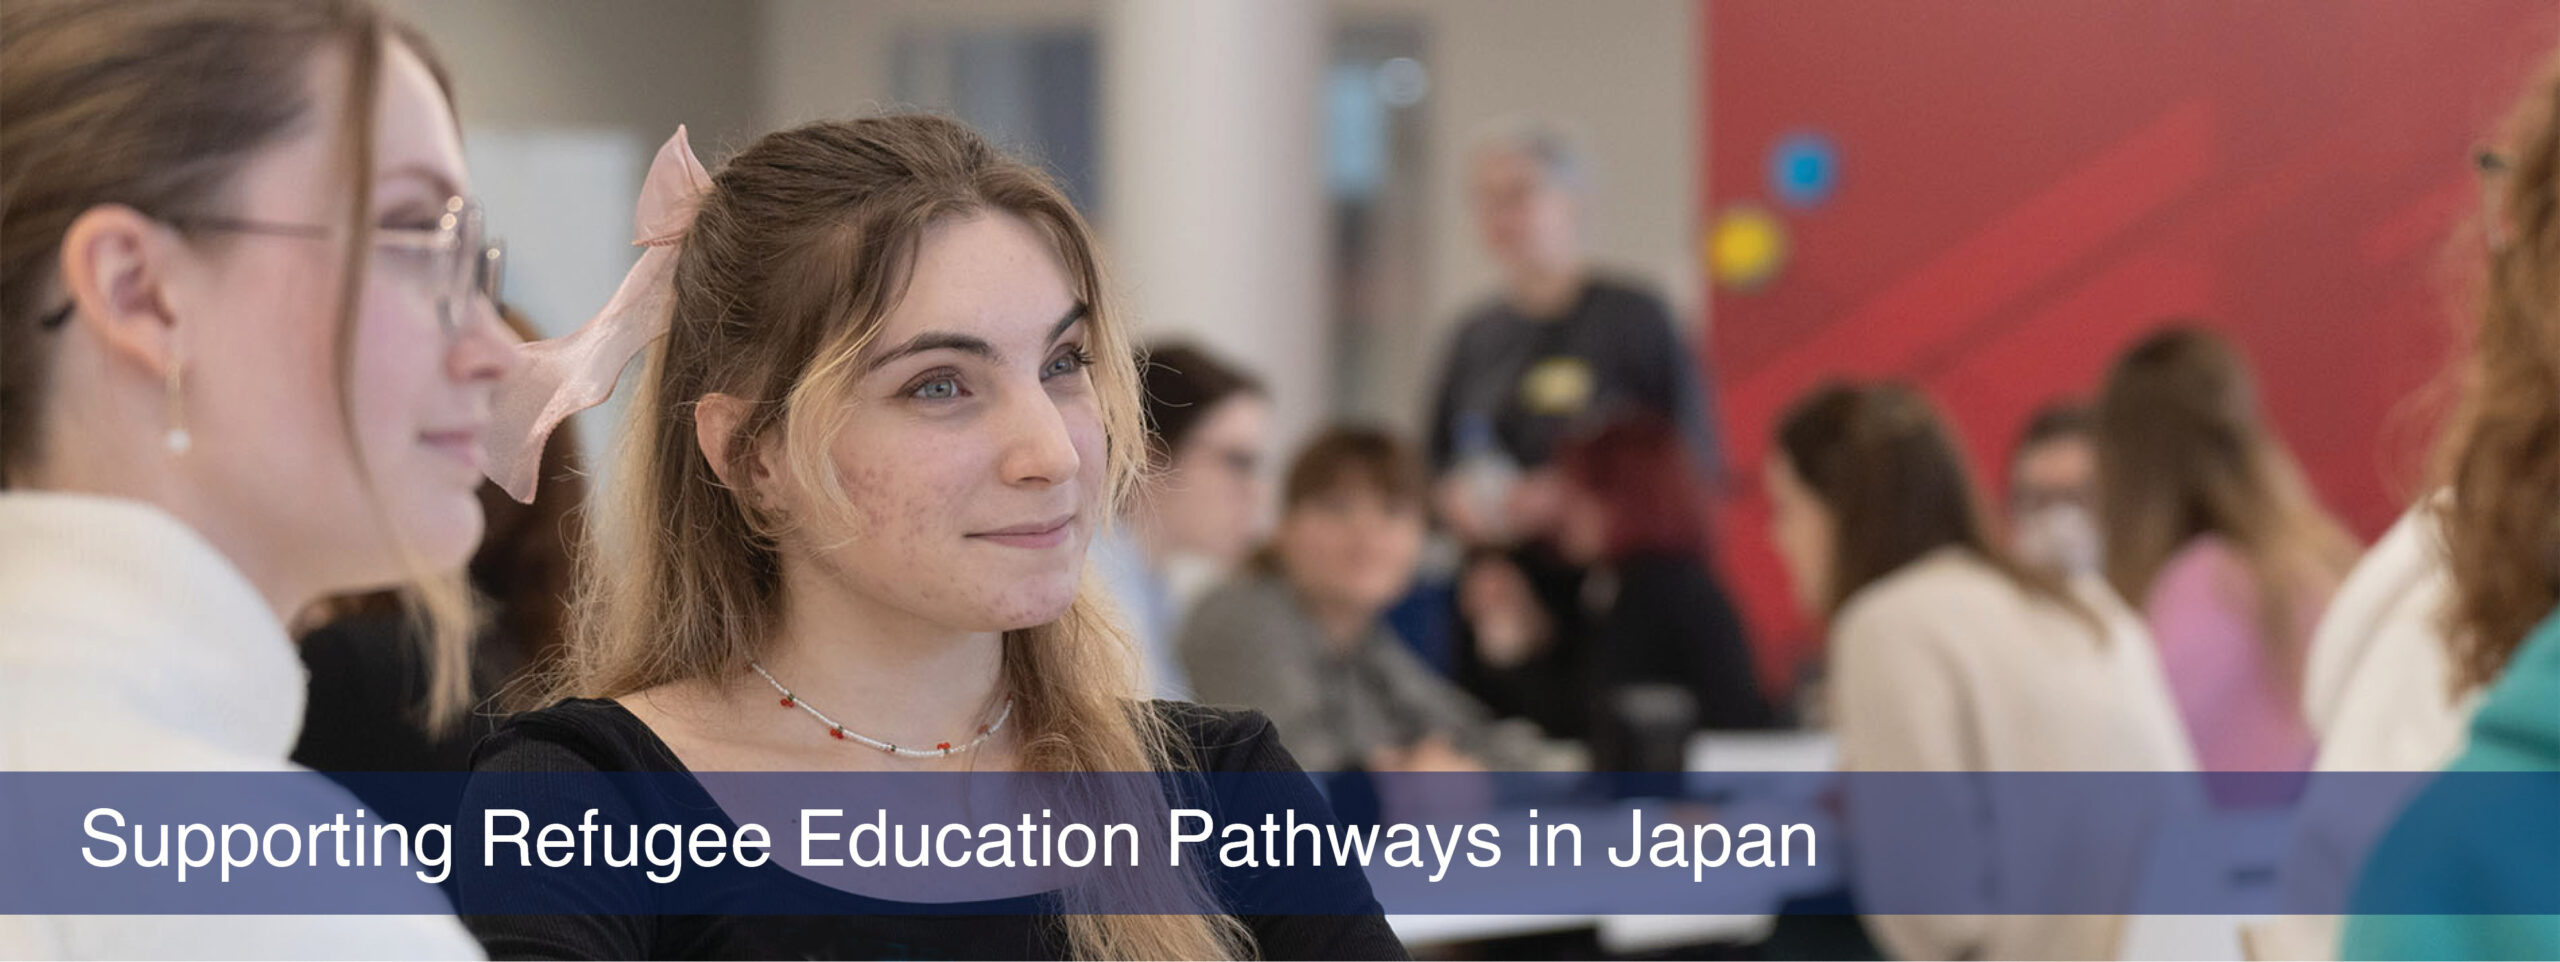 Education Pathways